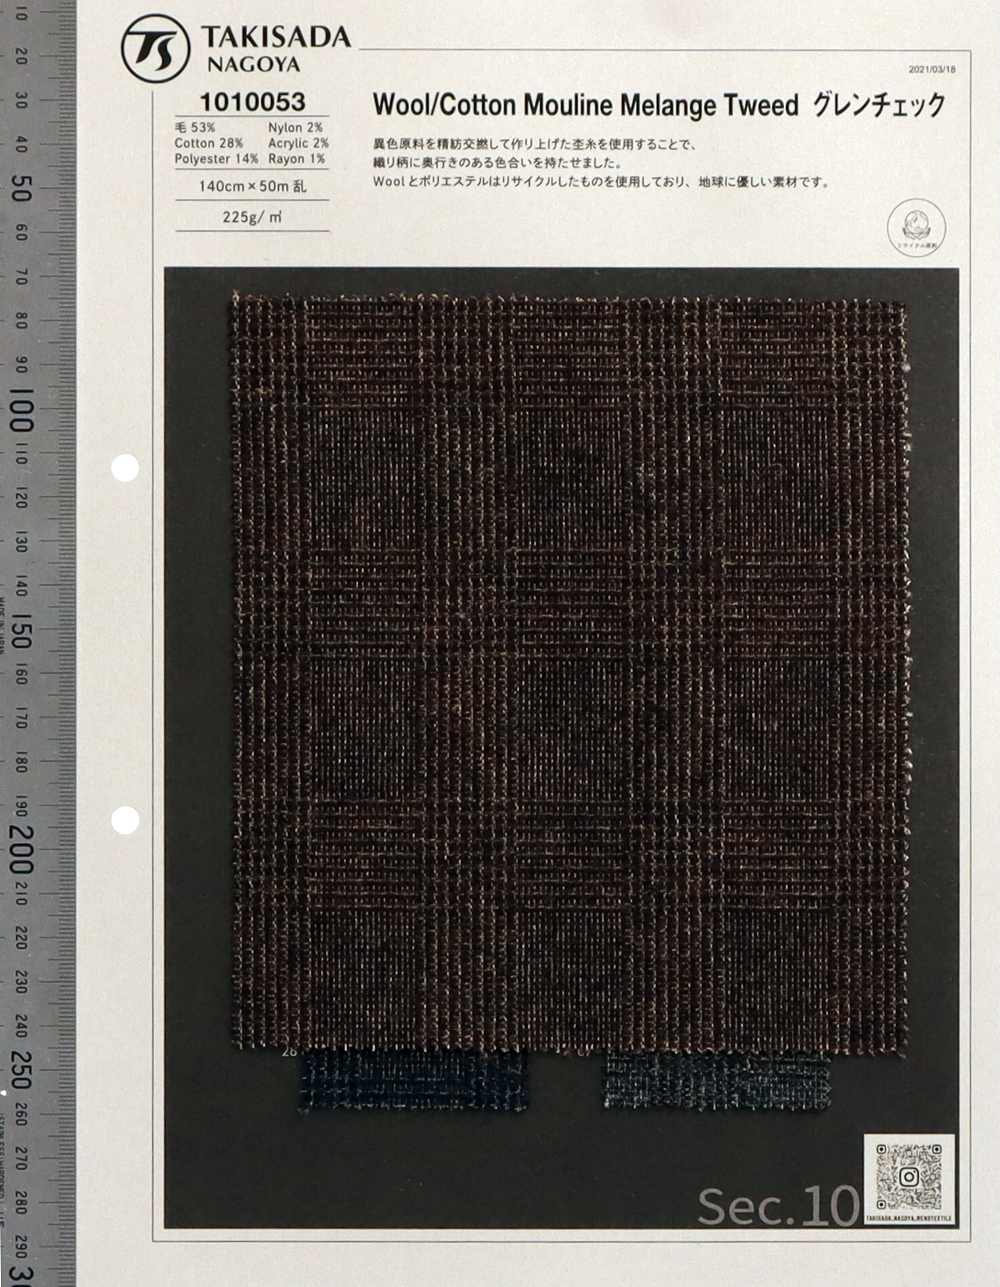 1010053 RE: NEWOOL® Wool / Cotton Melange Vải Tweed Glen Kẻ Caro Takisada Nagoya